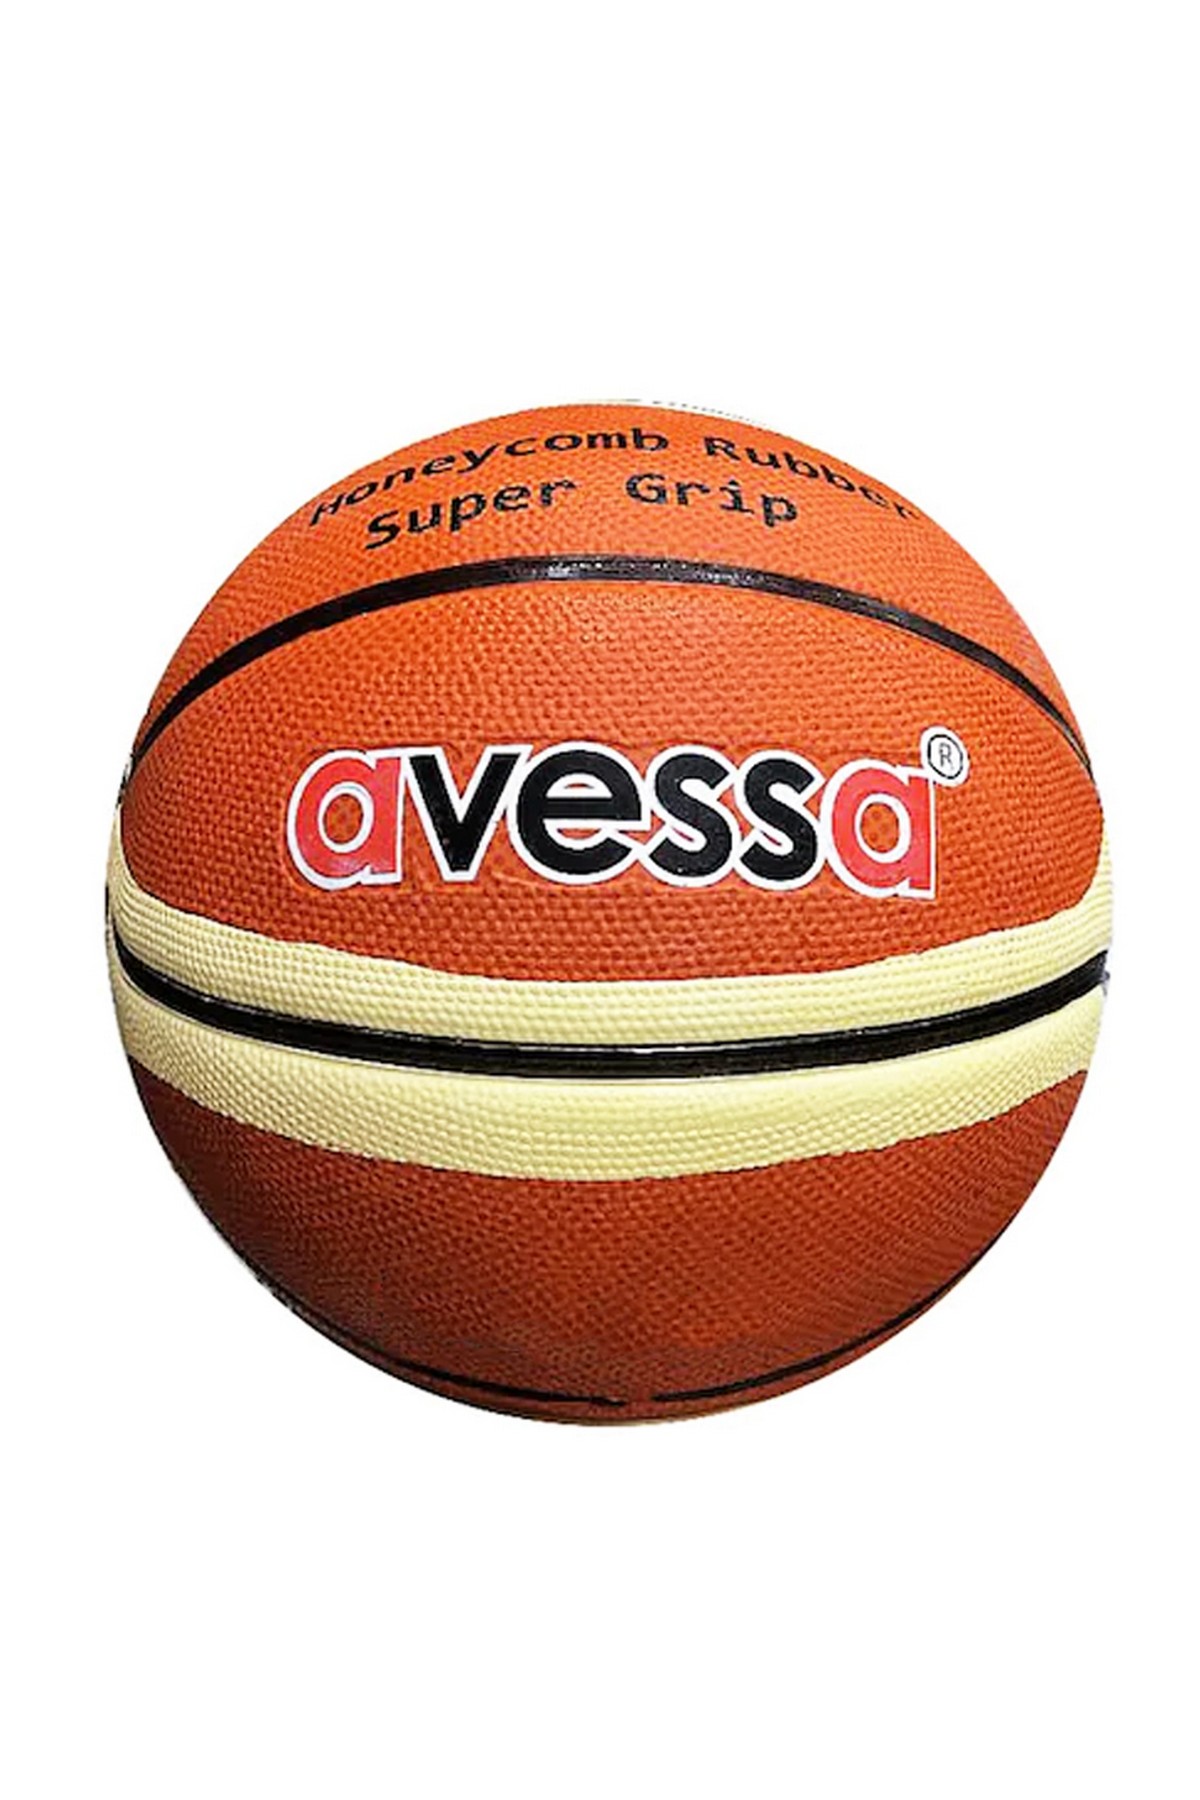 Avessa BRT-500 - Basketbol Topu 5 No